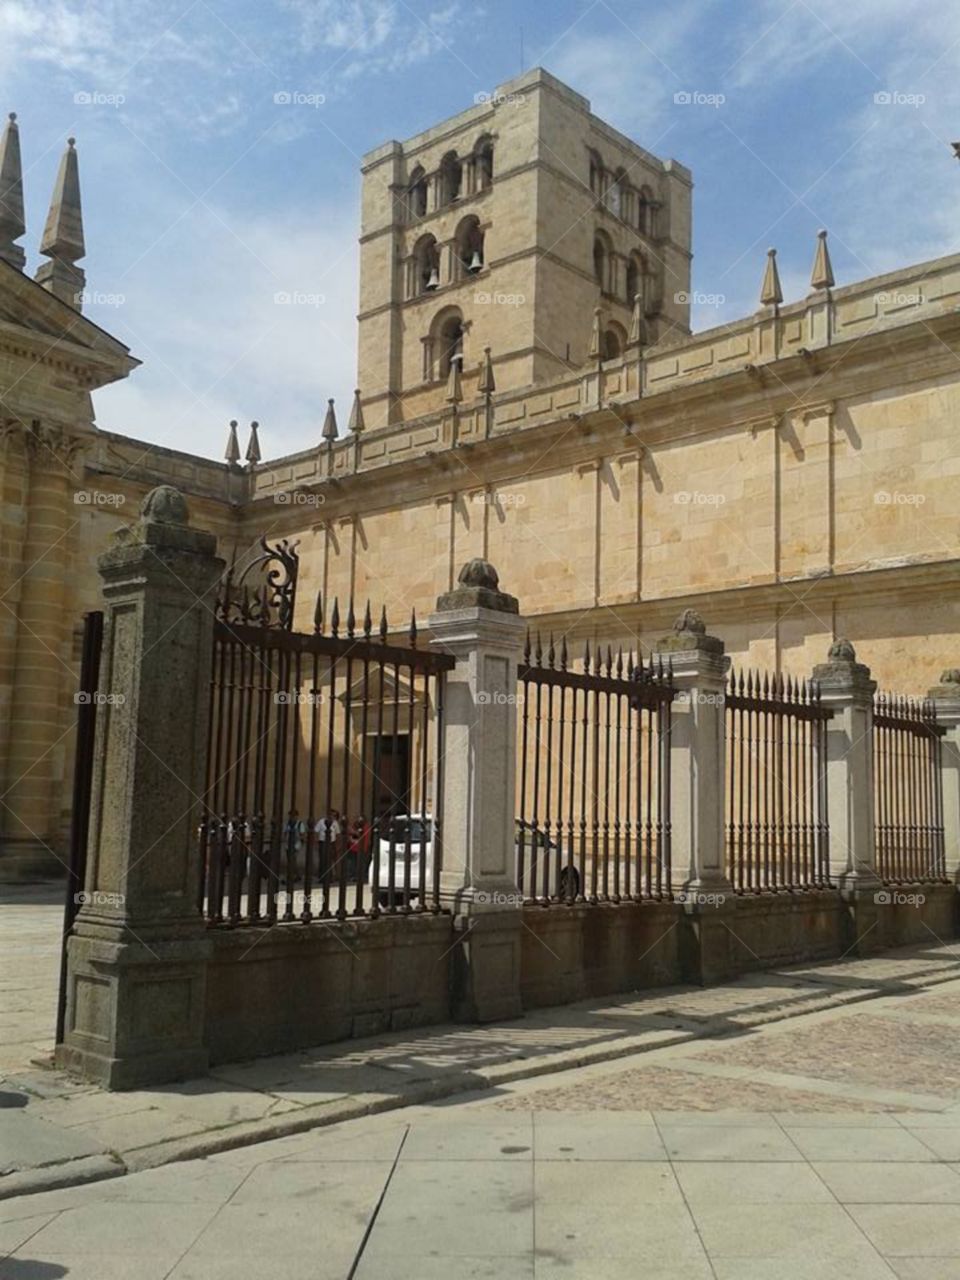 Zamora's Cathedral